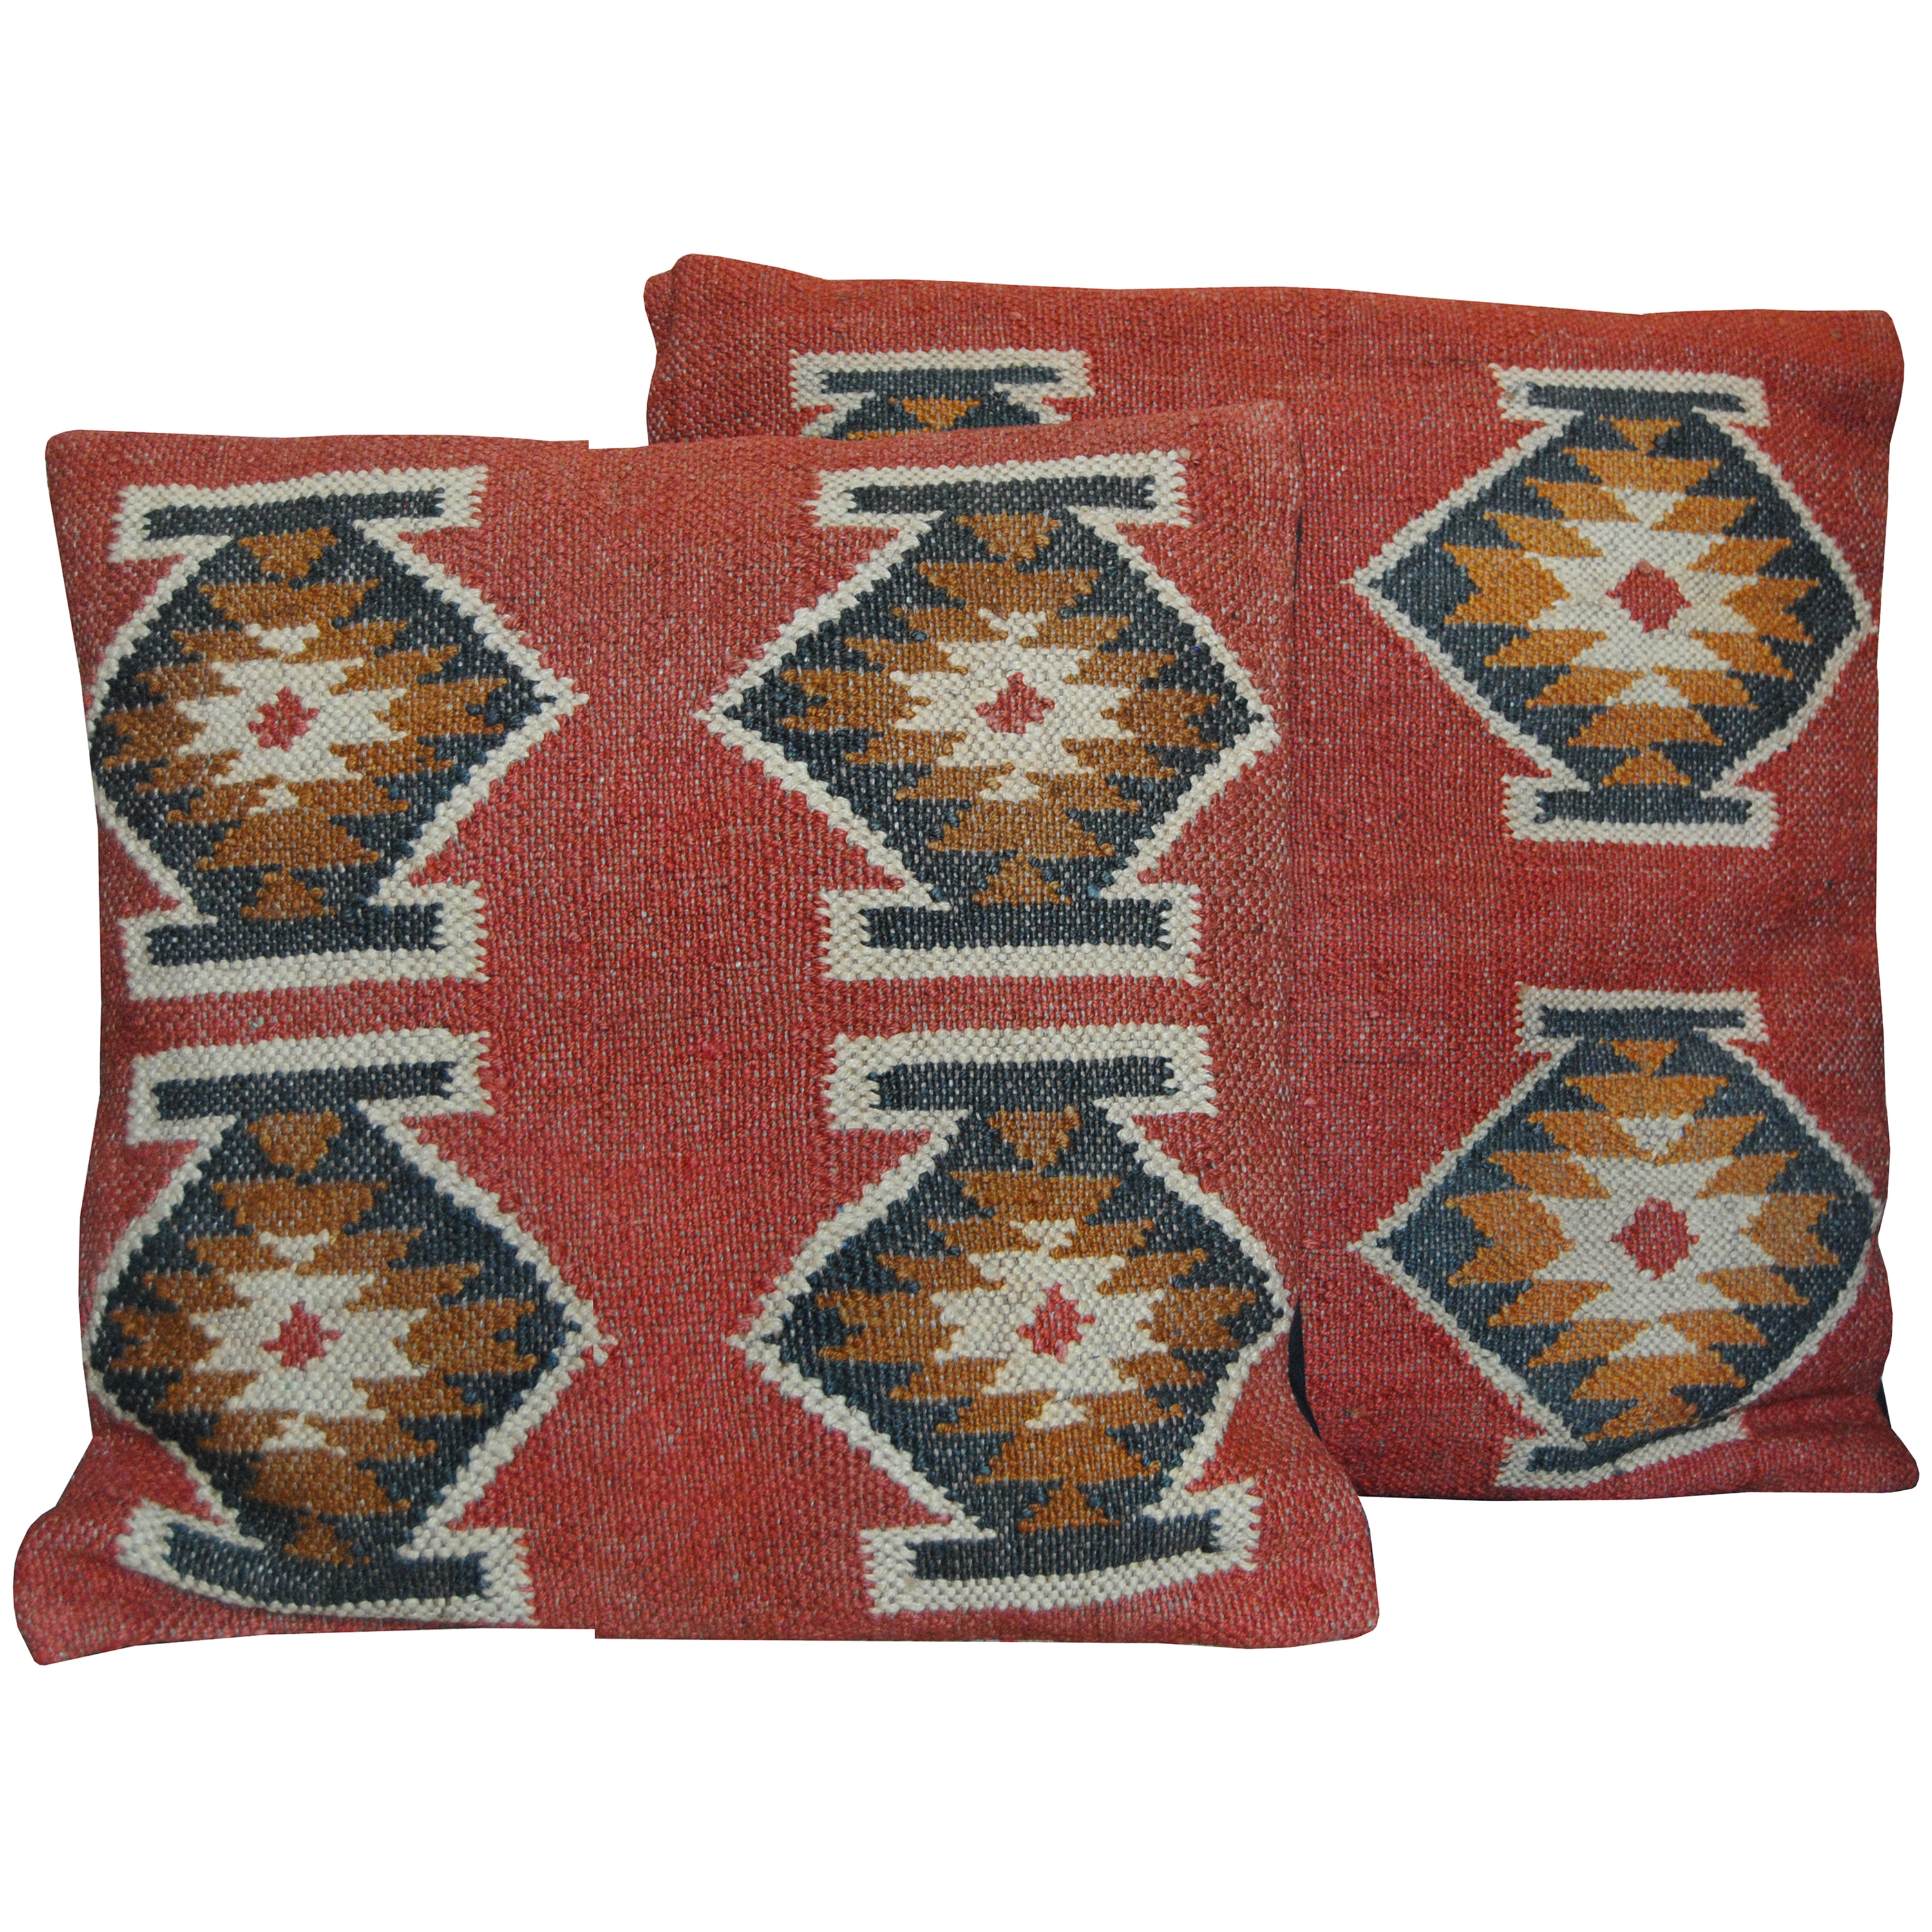 https://ak1.ostkcdn.com/images/products/18793942/Handmade-Herat-Oriental-Kilim-Pillows-Set-of-Two-7676a835-6379-482d-9794-c1879782f5a9.jpg